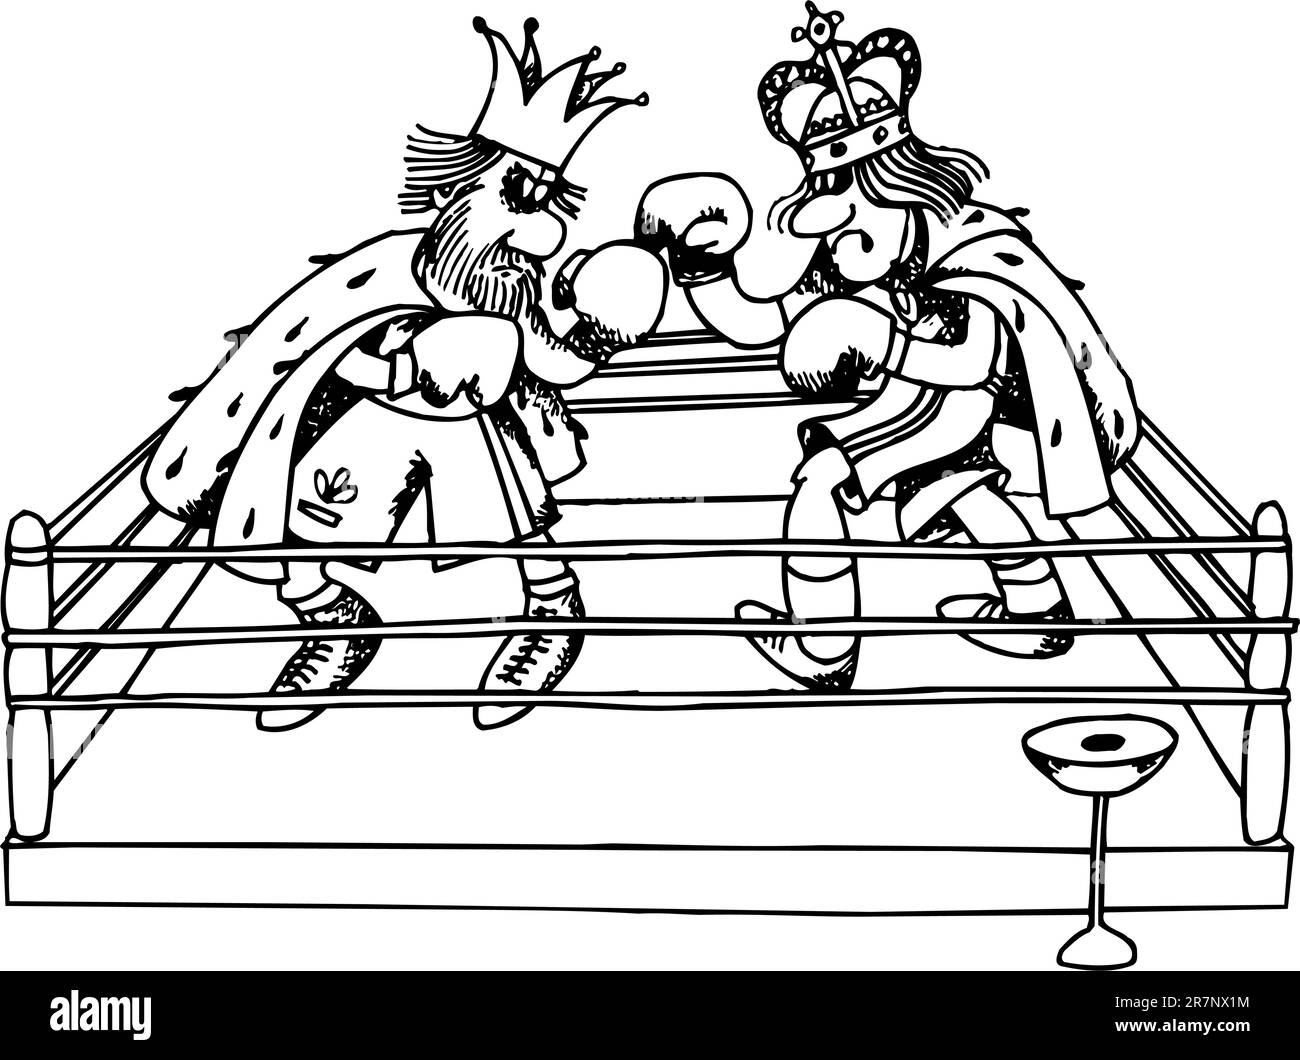 Kings' battle on boxing ring Stock Vector